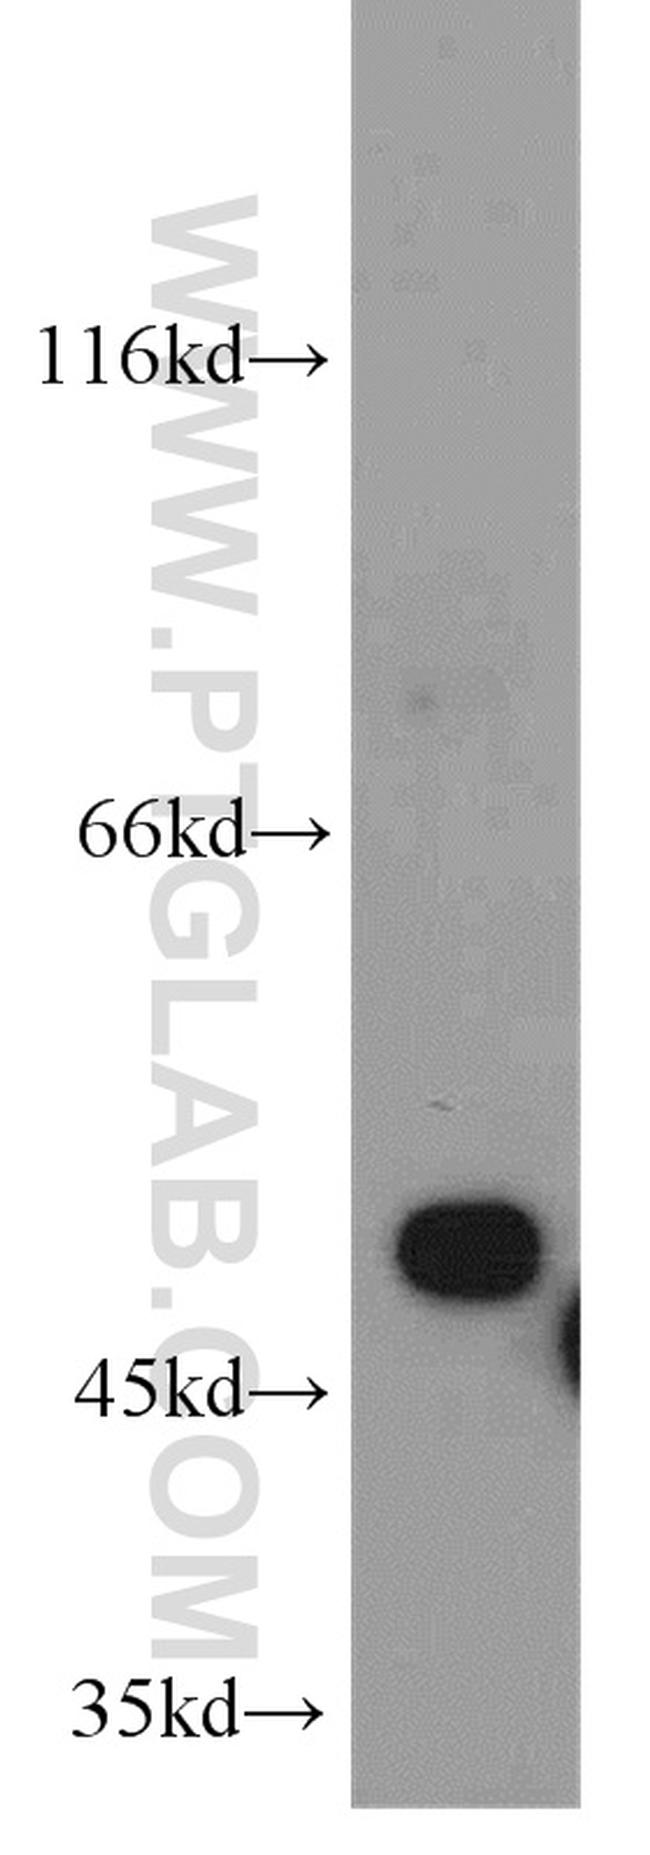 EIF2S2 Antibody in Western Blot (WB)